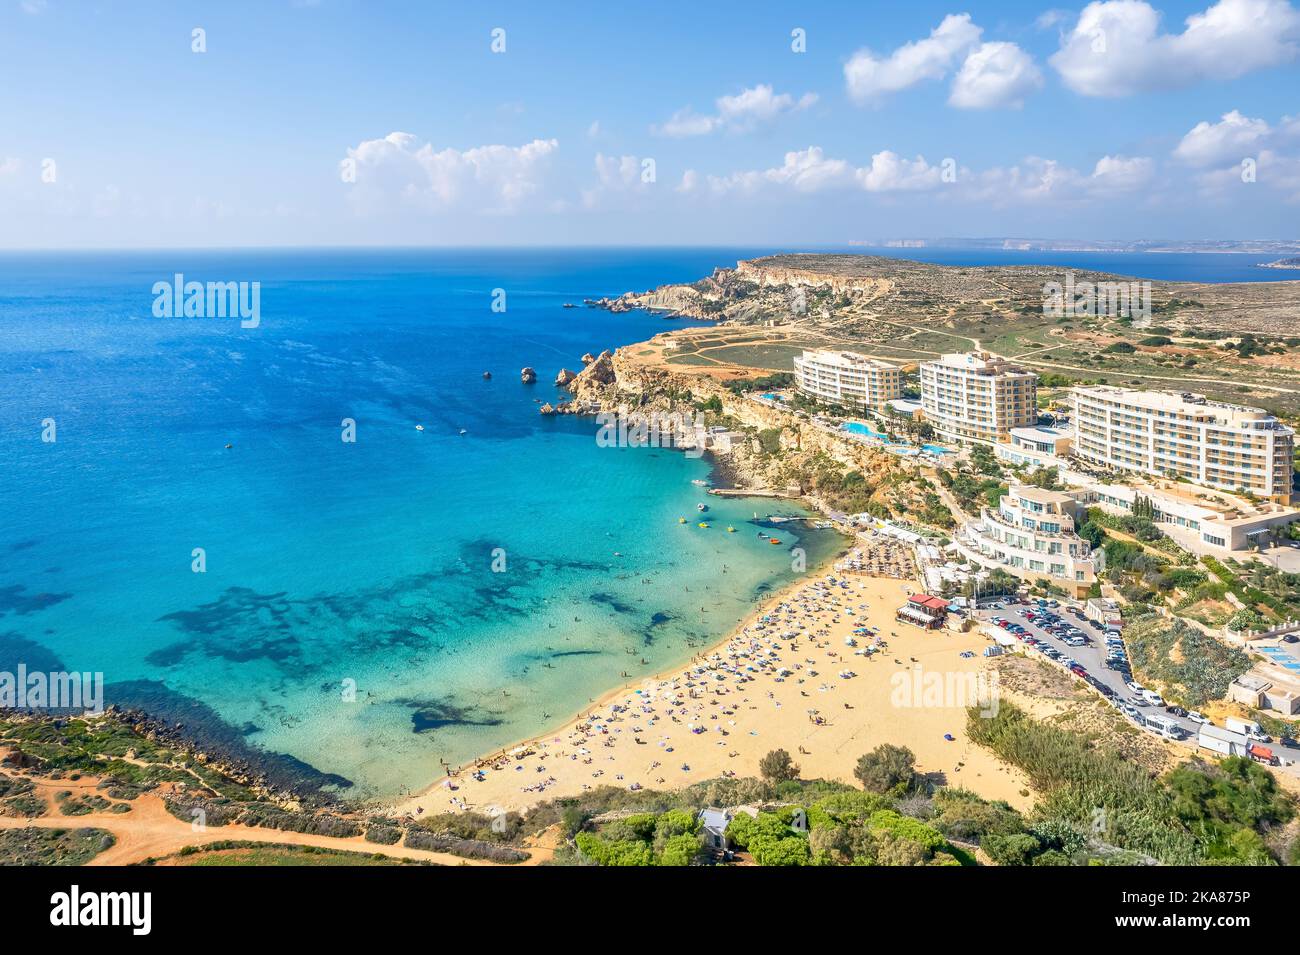 Landscape with Golden bay beach, Malta Stock Photo